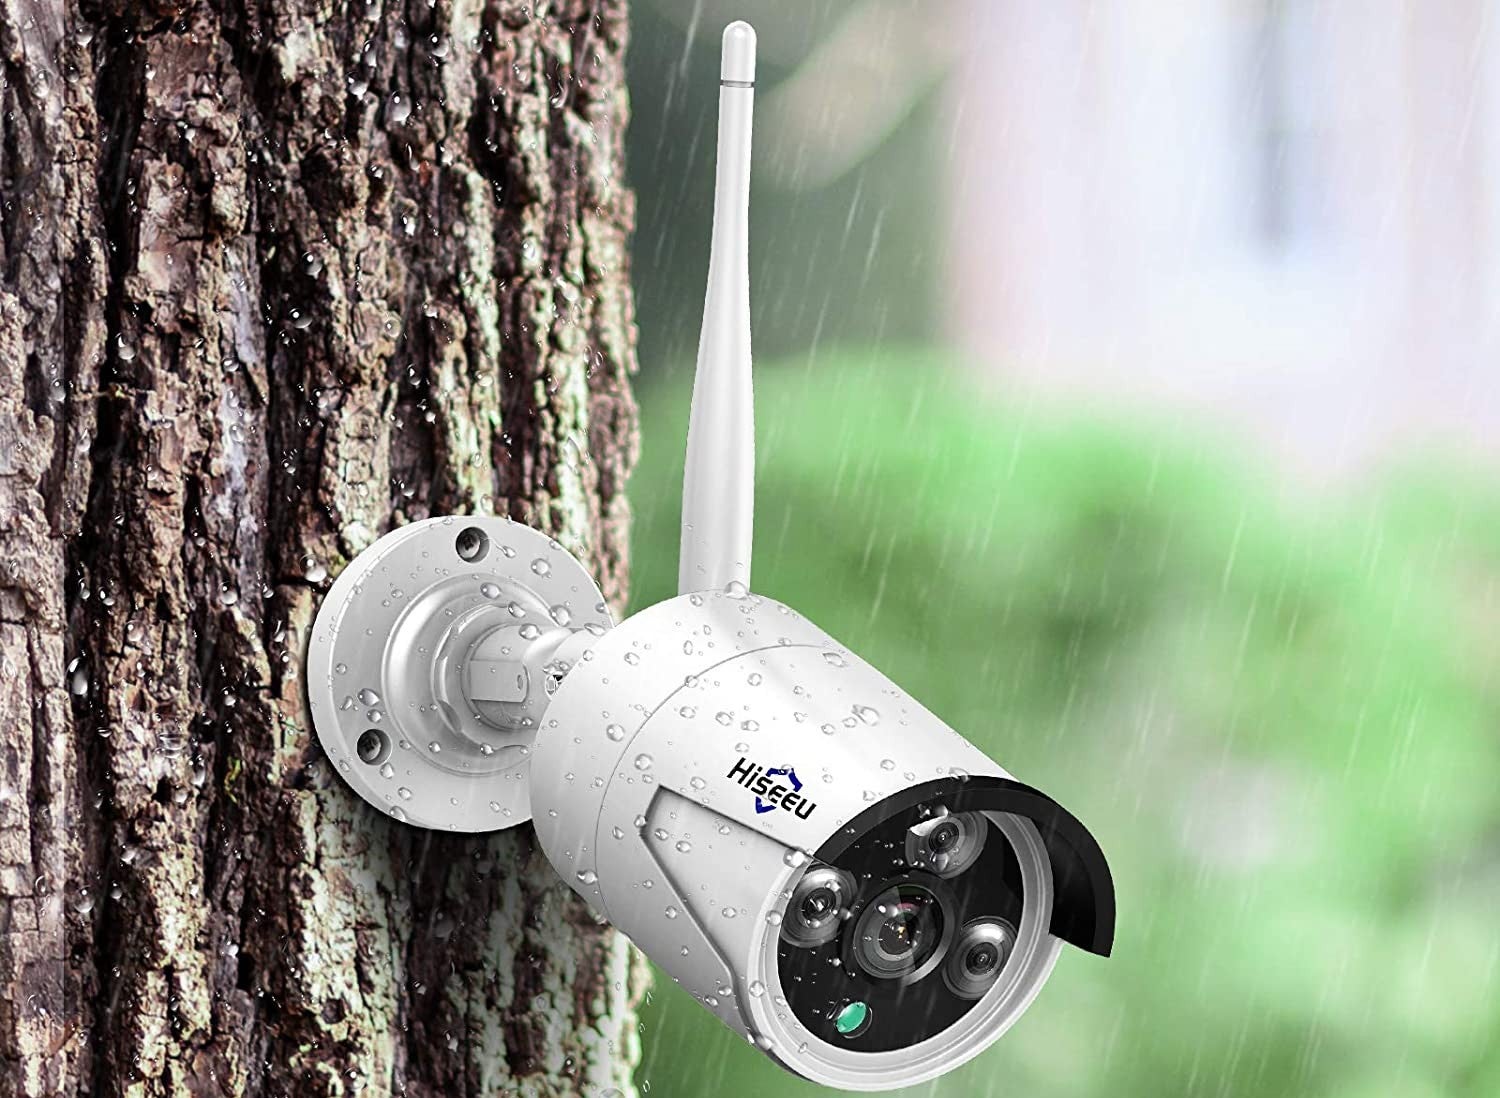 Advantages and disadvantages of surveillance cameras